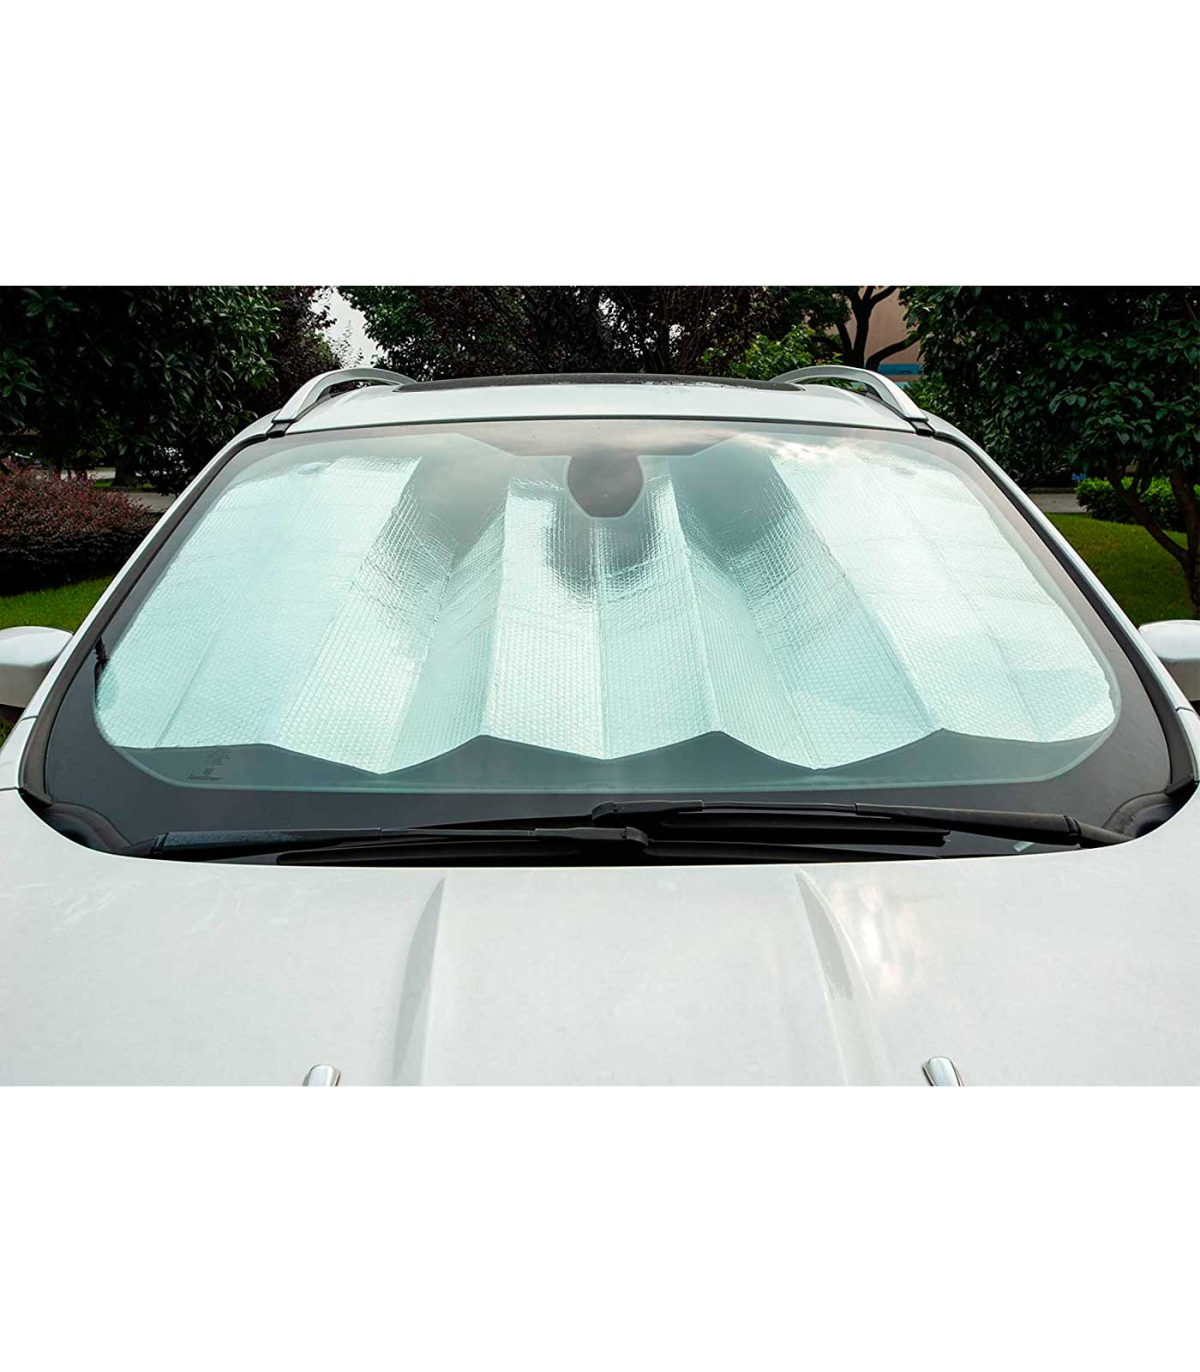 Parasol para parabrisas de coche plegable, protector solar delantero,  reflectante, vehículos, camionetas, todoterrenos, furgonet